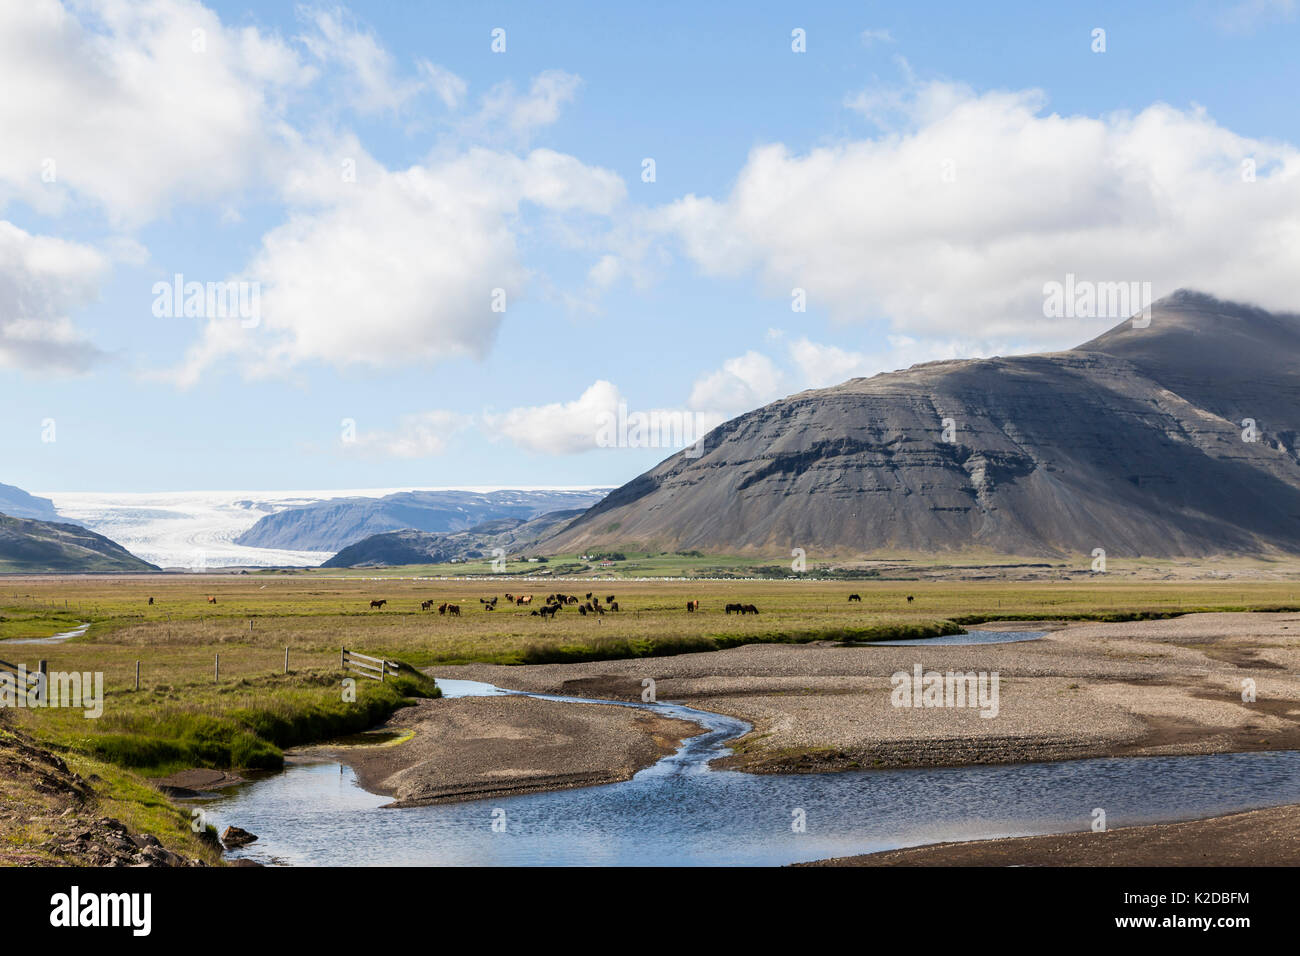 Icelandic landscape with horses and glacier, Iceland, July 2012 Stock Photo